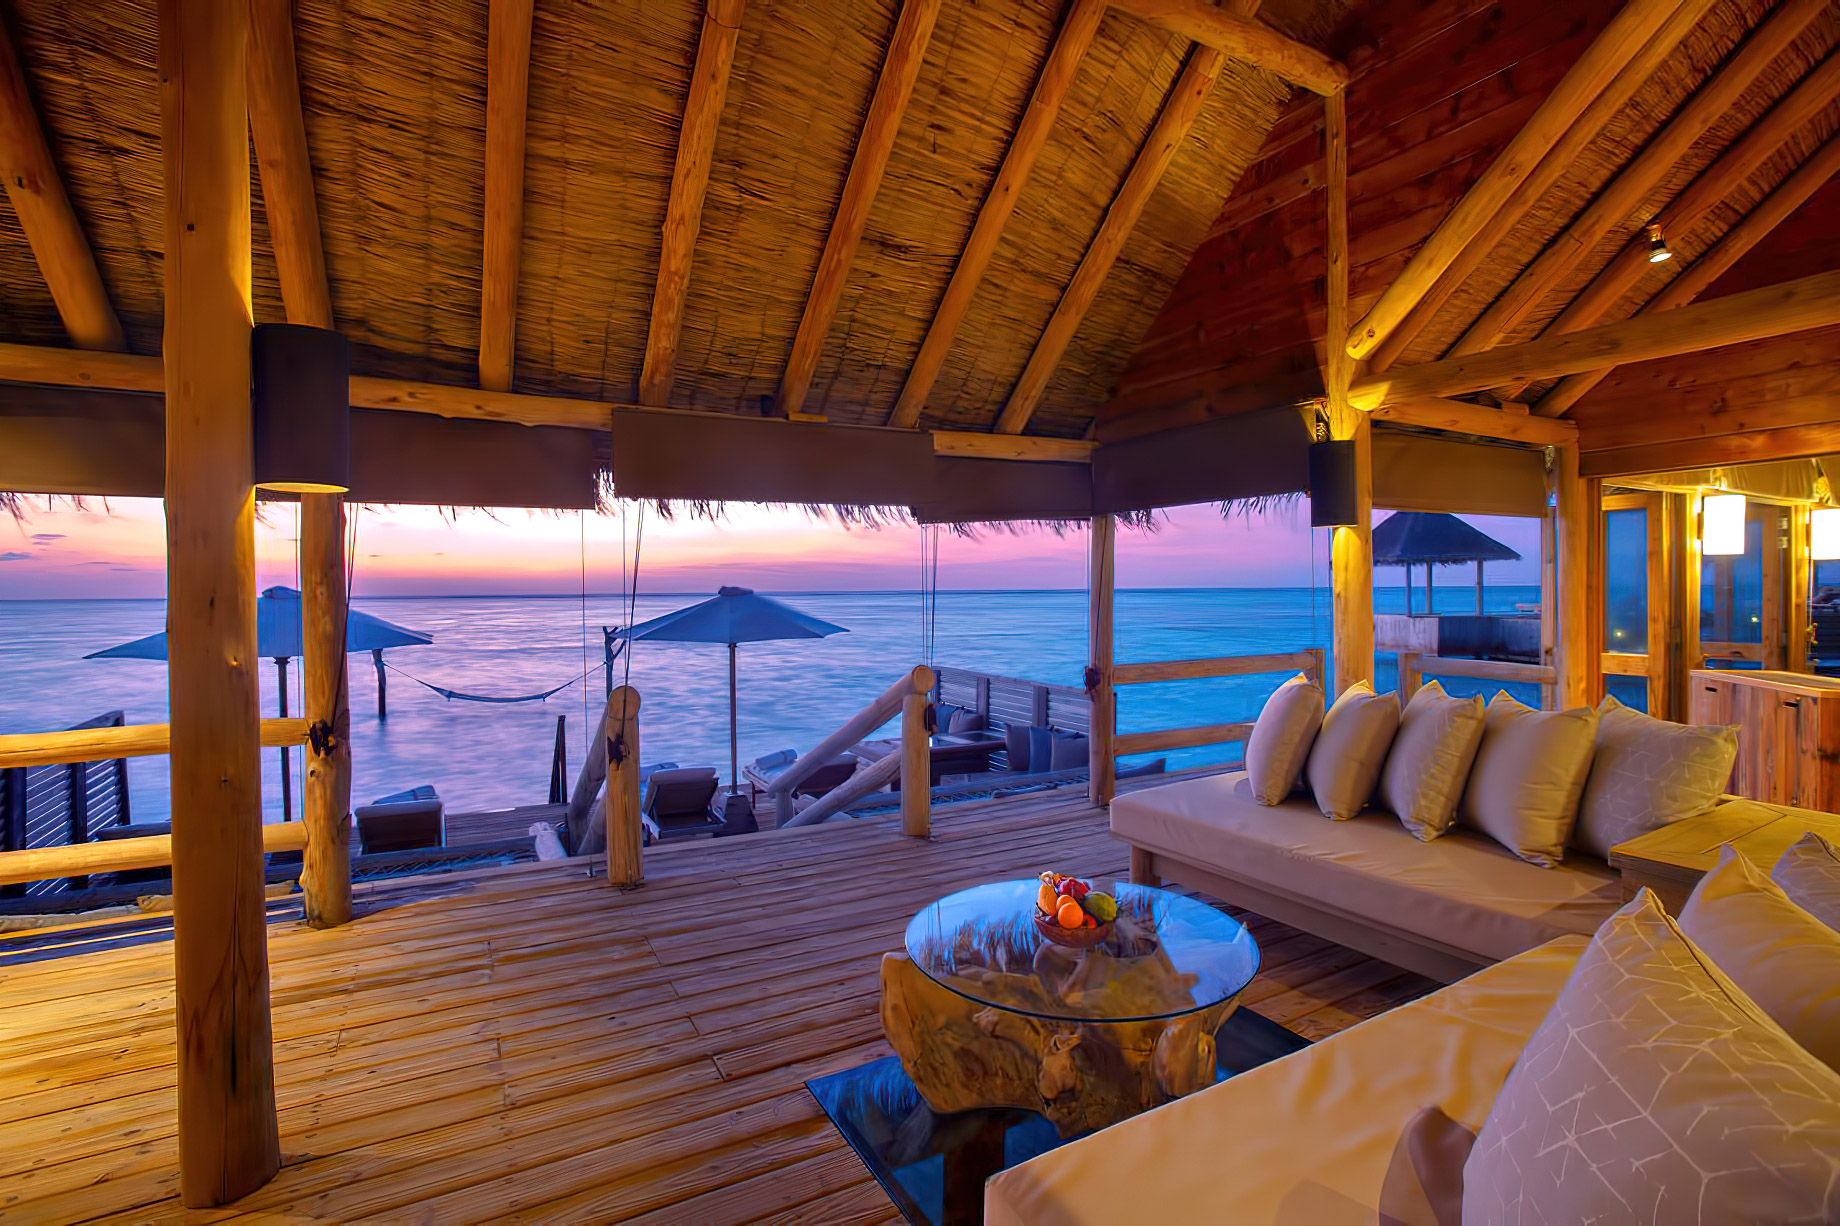 Gili Lankanfushi Resort – North Male Atoll, Maldives – Overwater Villa Sunset